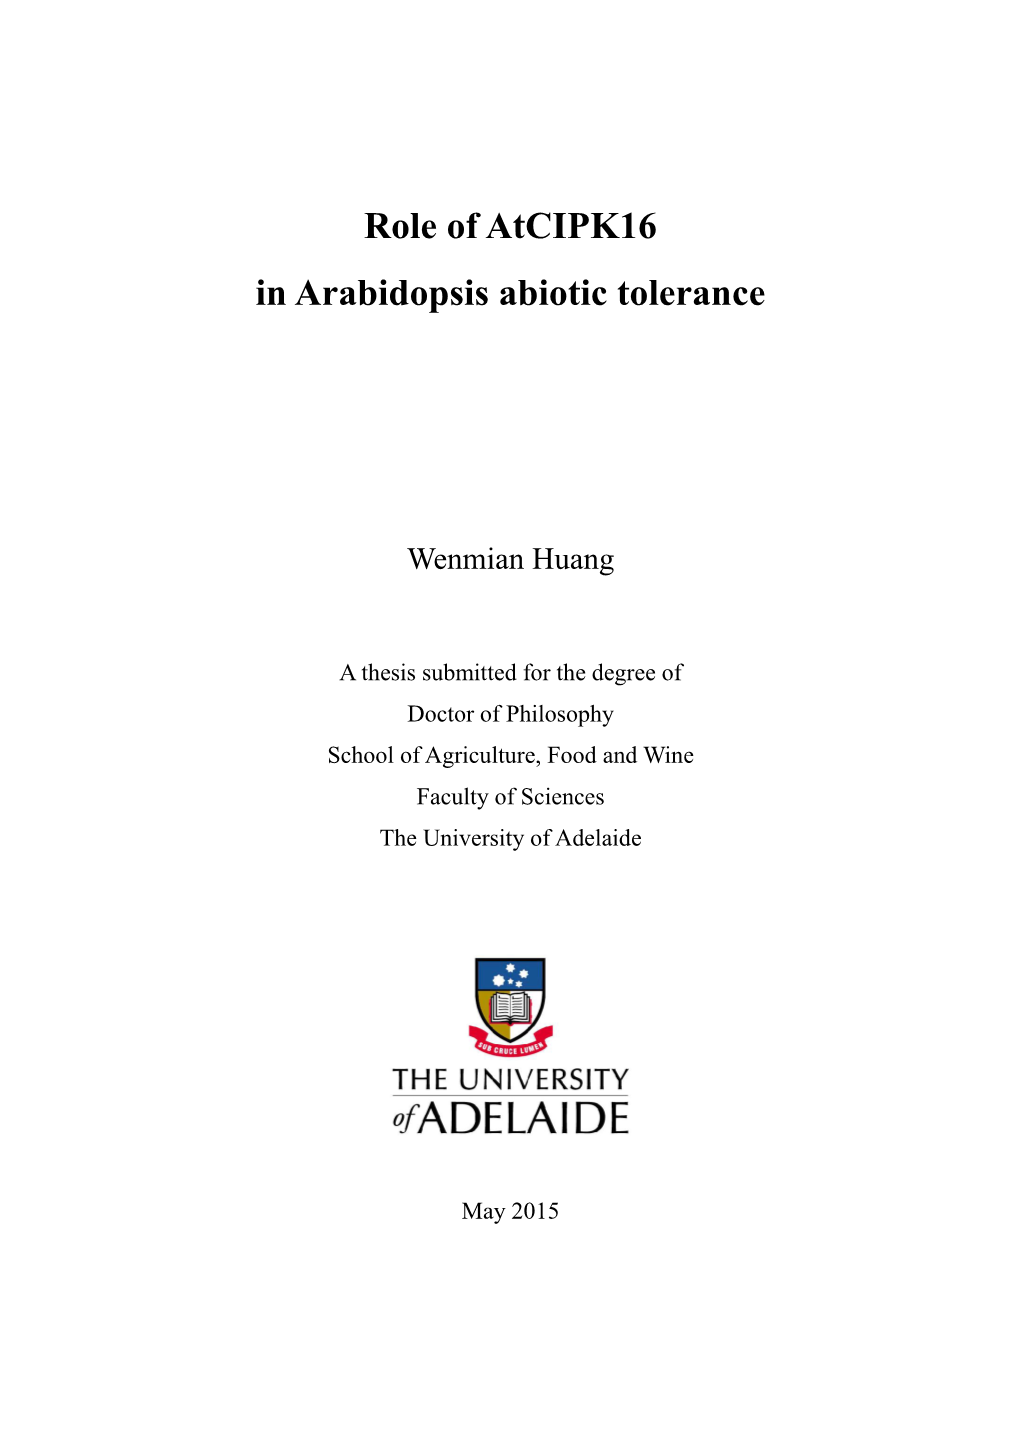 Role of Atcipk16 in Arabidopsis Abiotic Tolerance